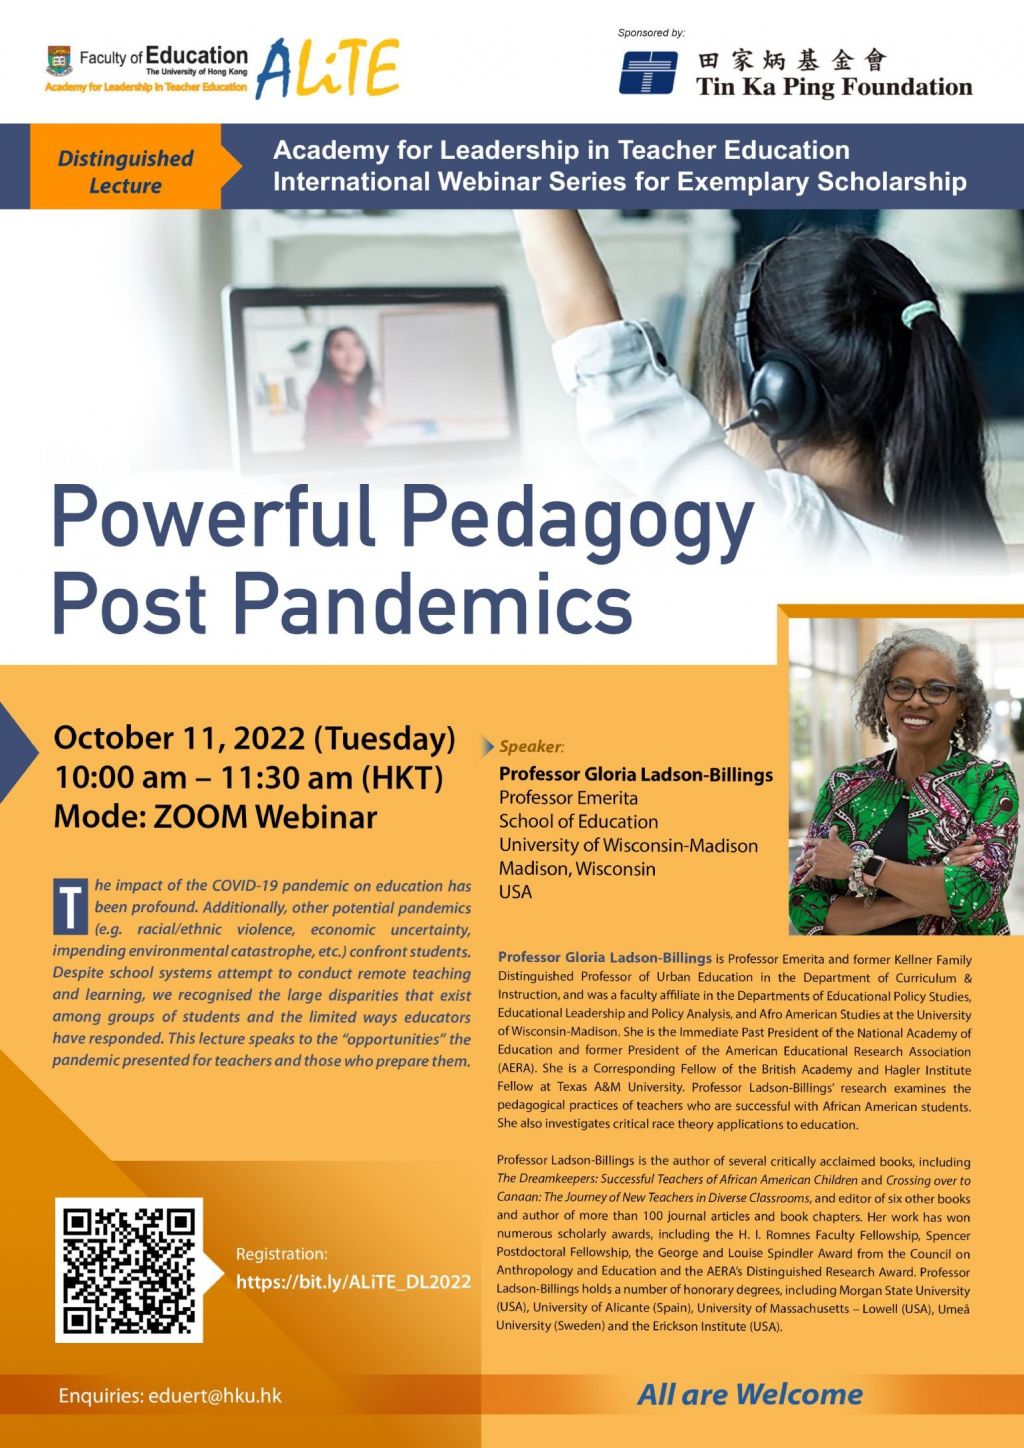 Powerful Pedagogy Post Pandemics – ALiTE International Webinar by Professor Gloria Ladson-Billings, University of Wisconsin-Madison, USA